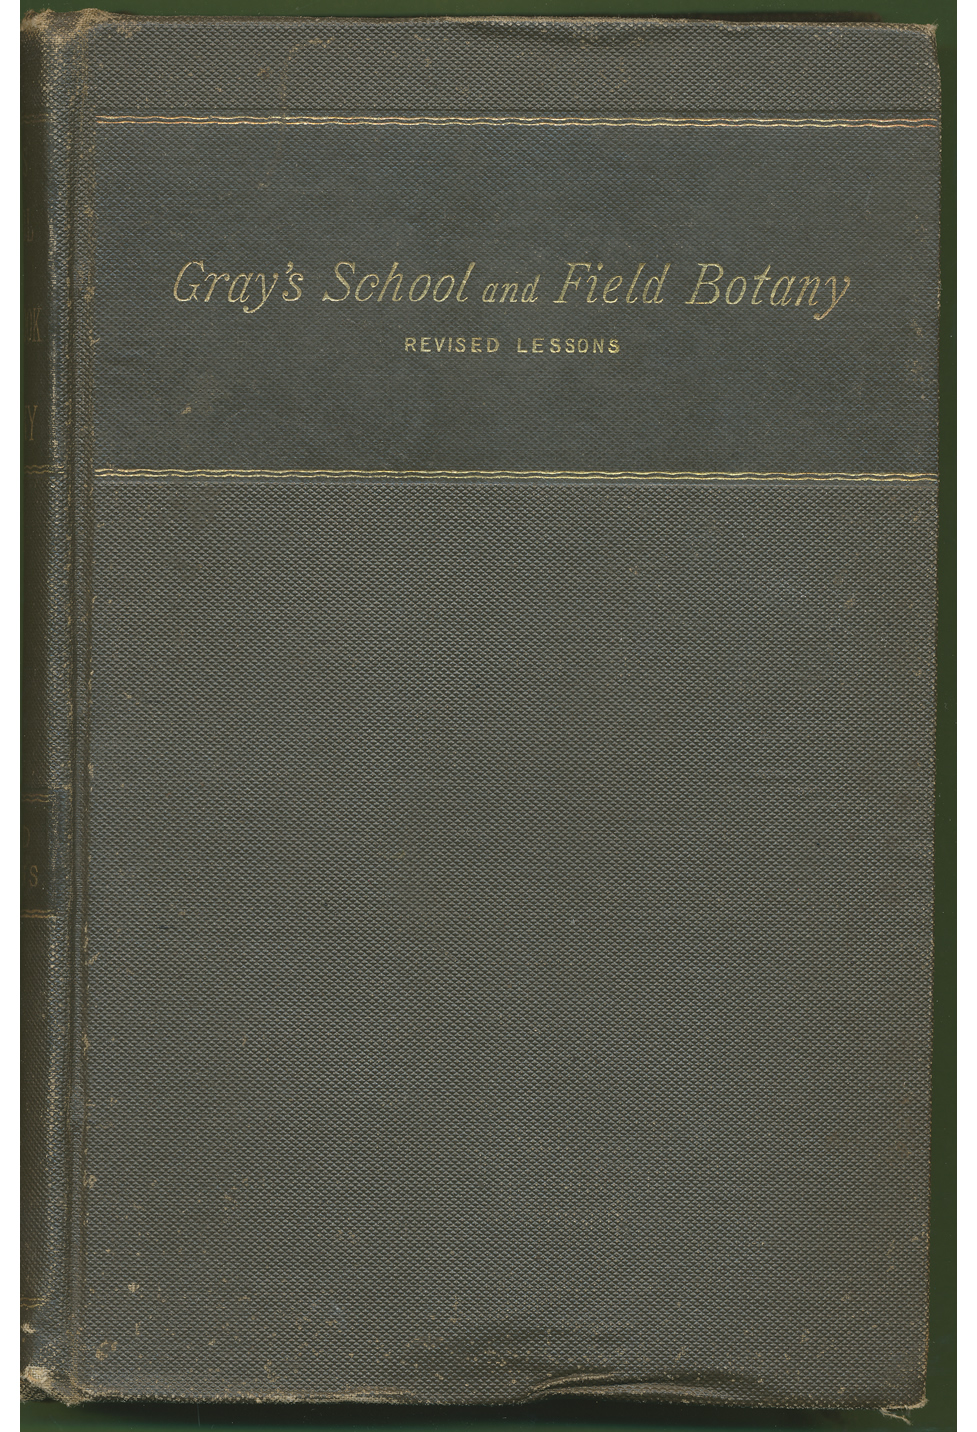 Gray's School and Field Botany